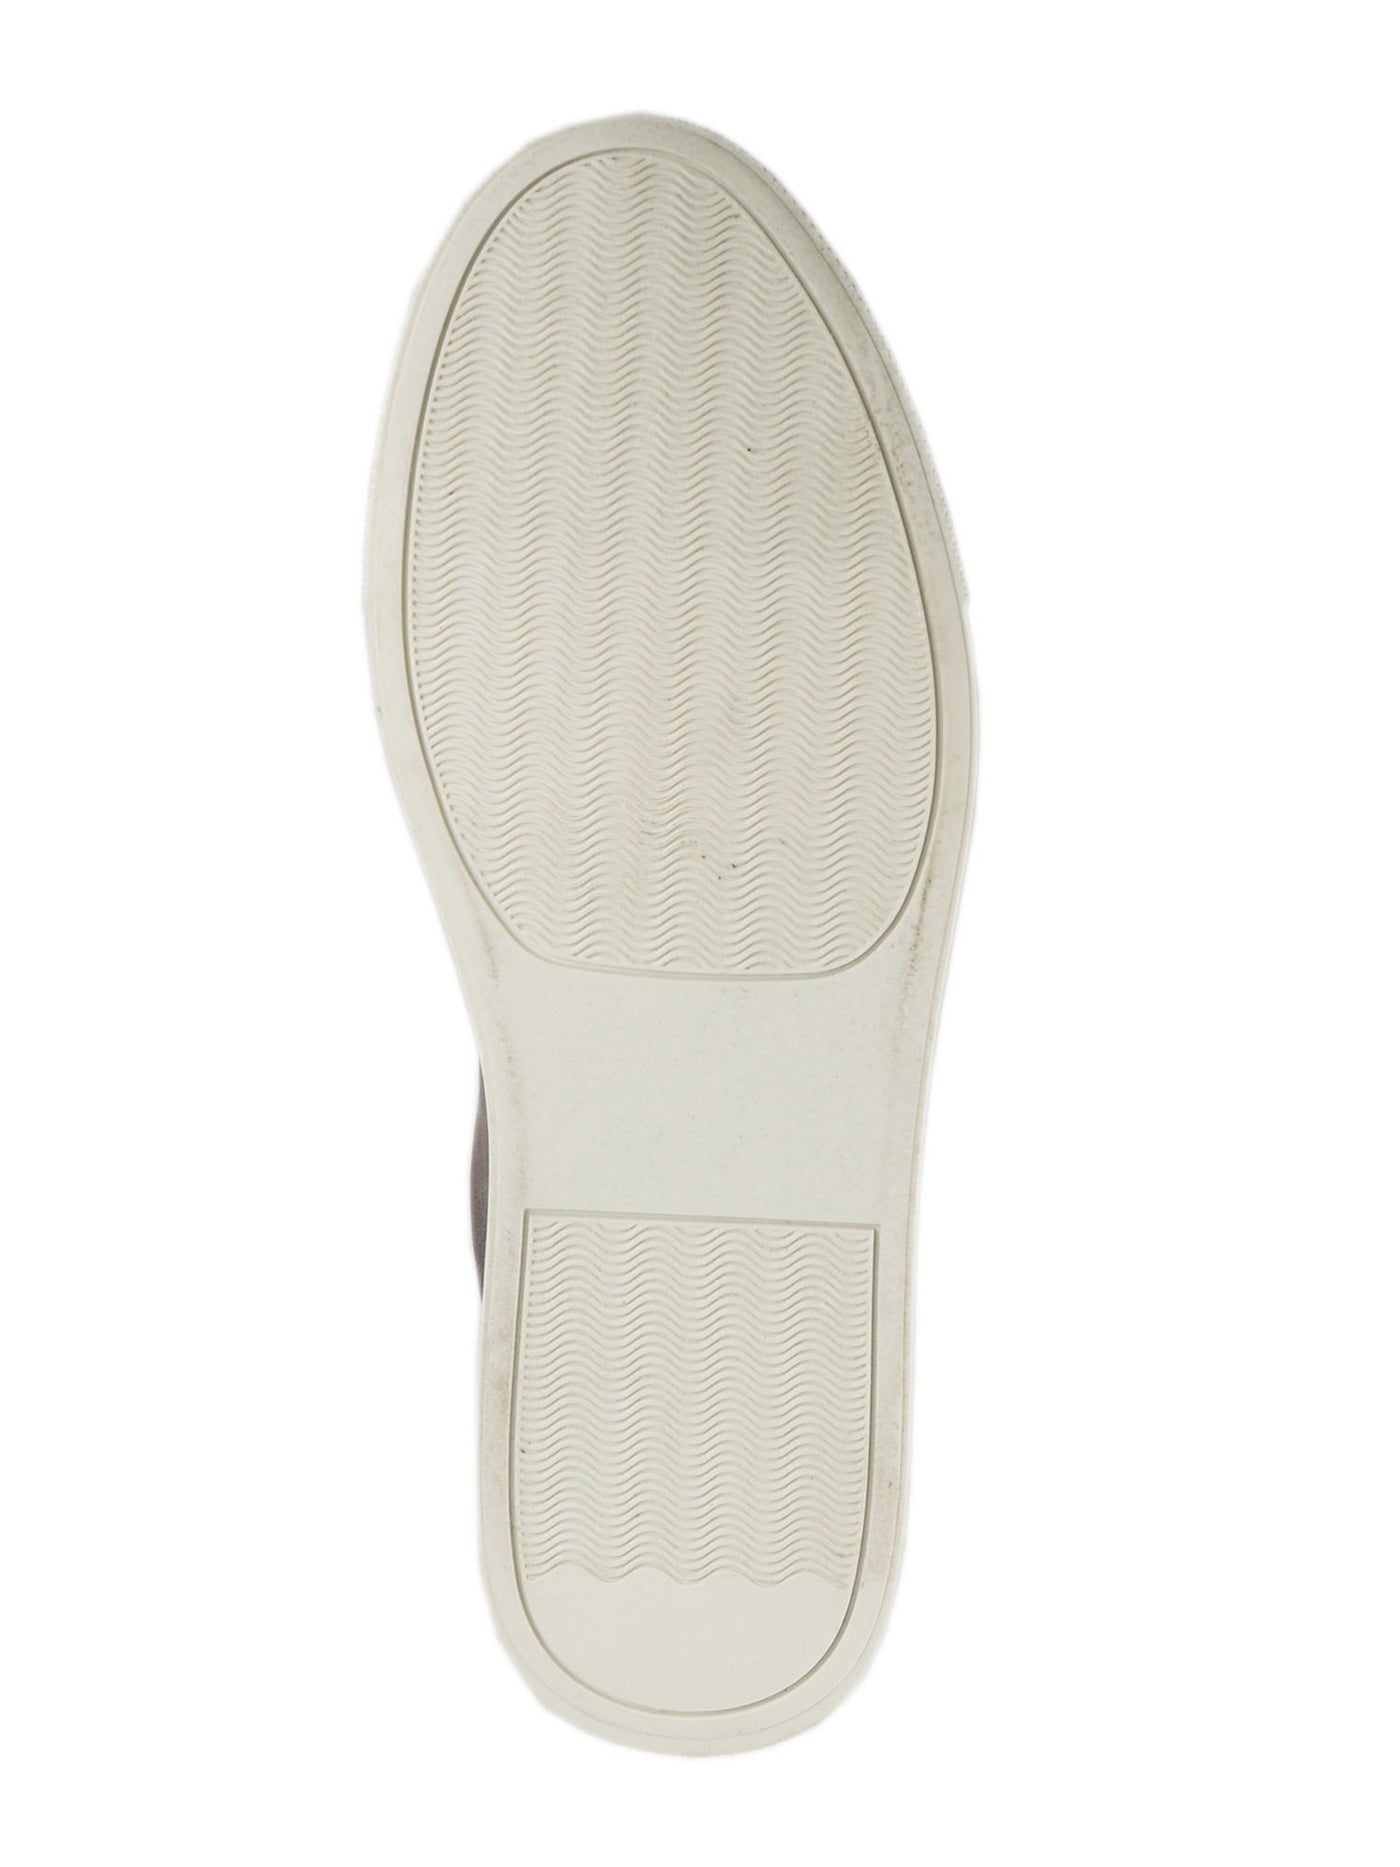 ALFANI Mens Brown Comfort Grayson Round Toe Platform Lace-Up Sneakers Shoes 10.5 M